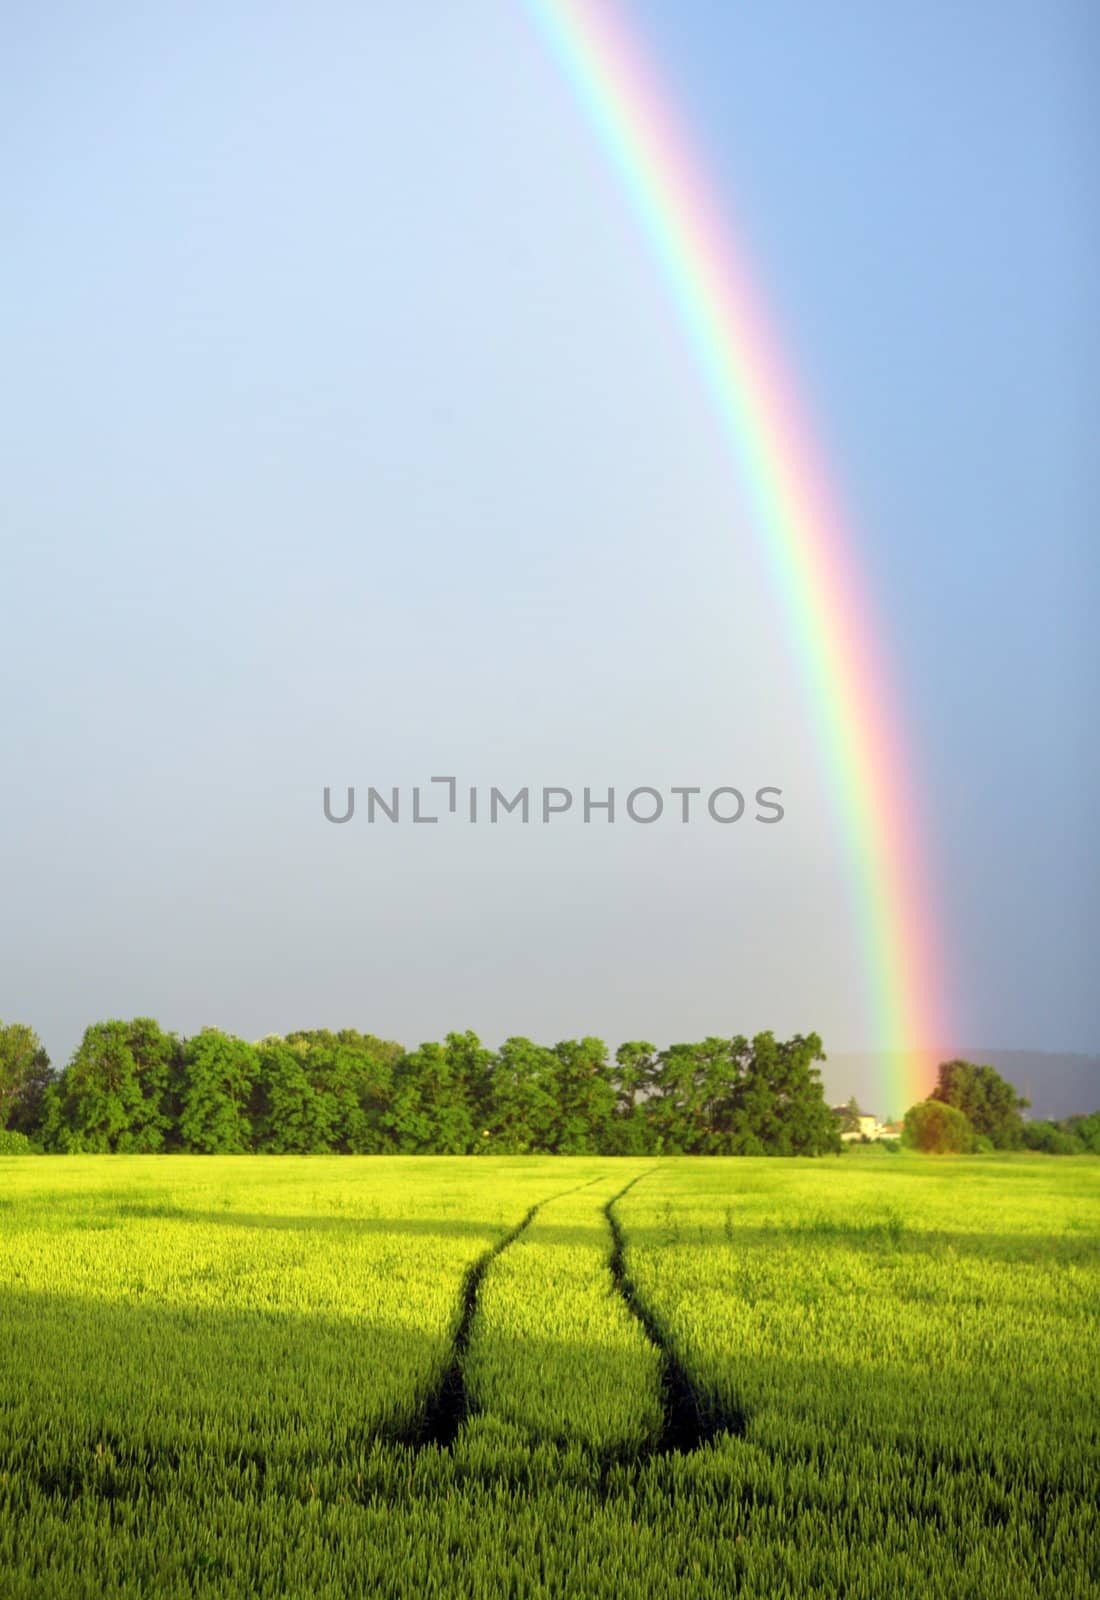 Rainbow on  blue sky over the rural landscape